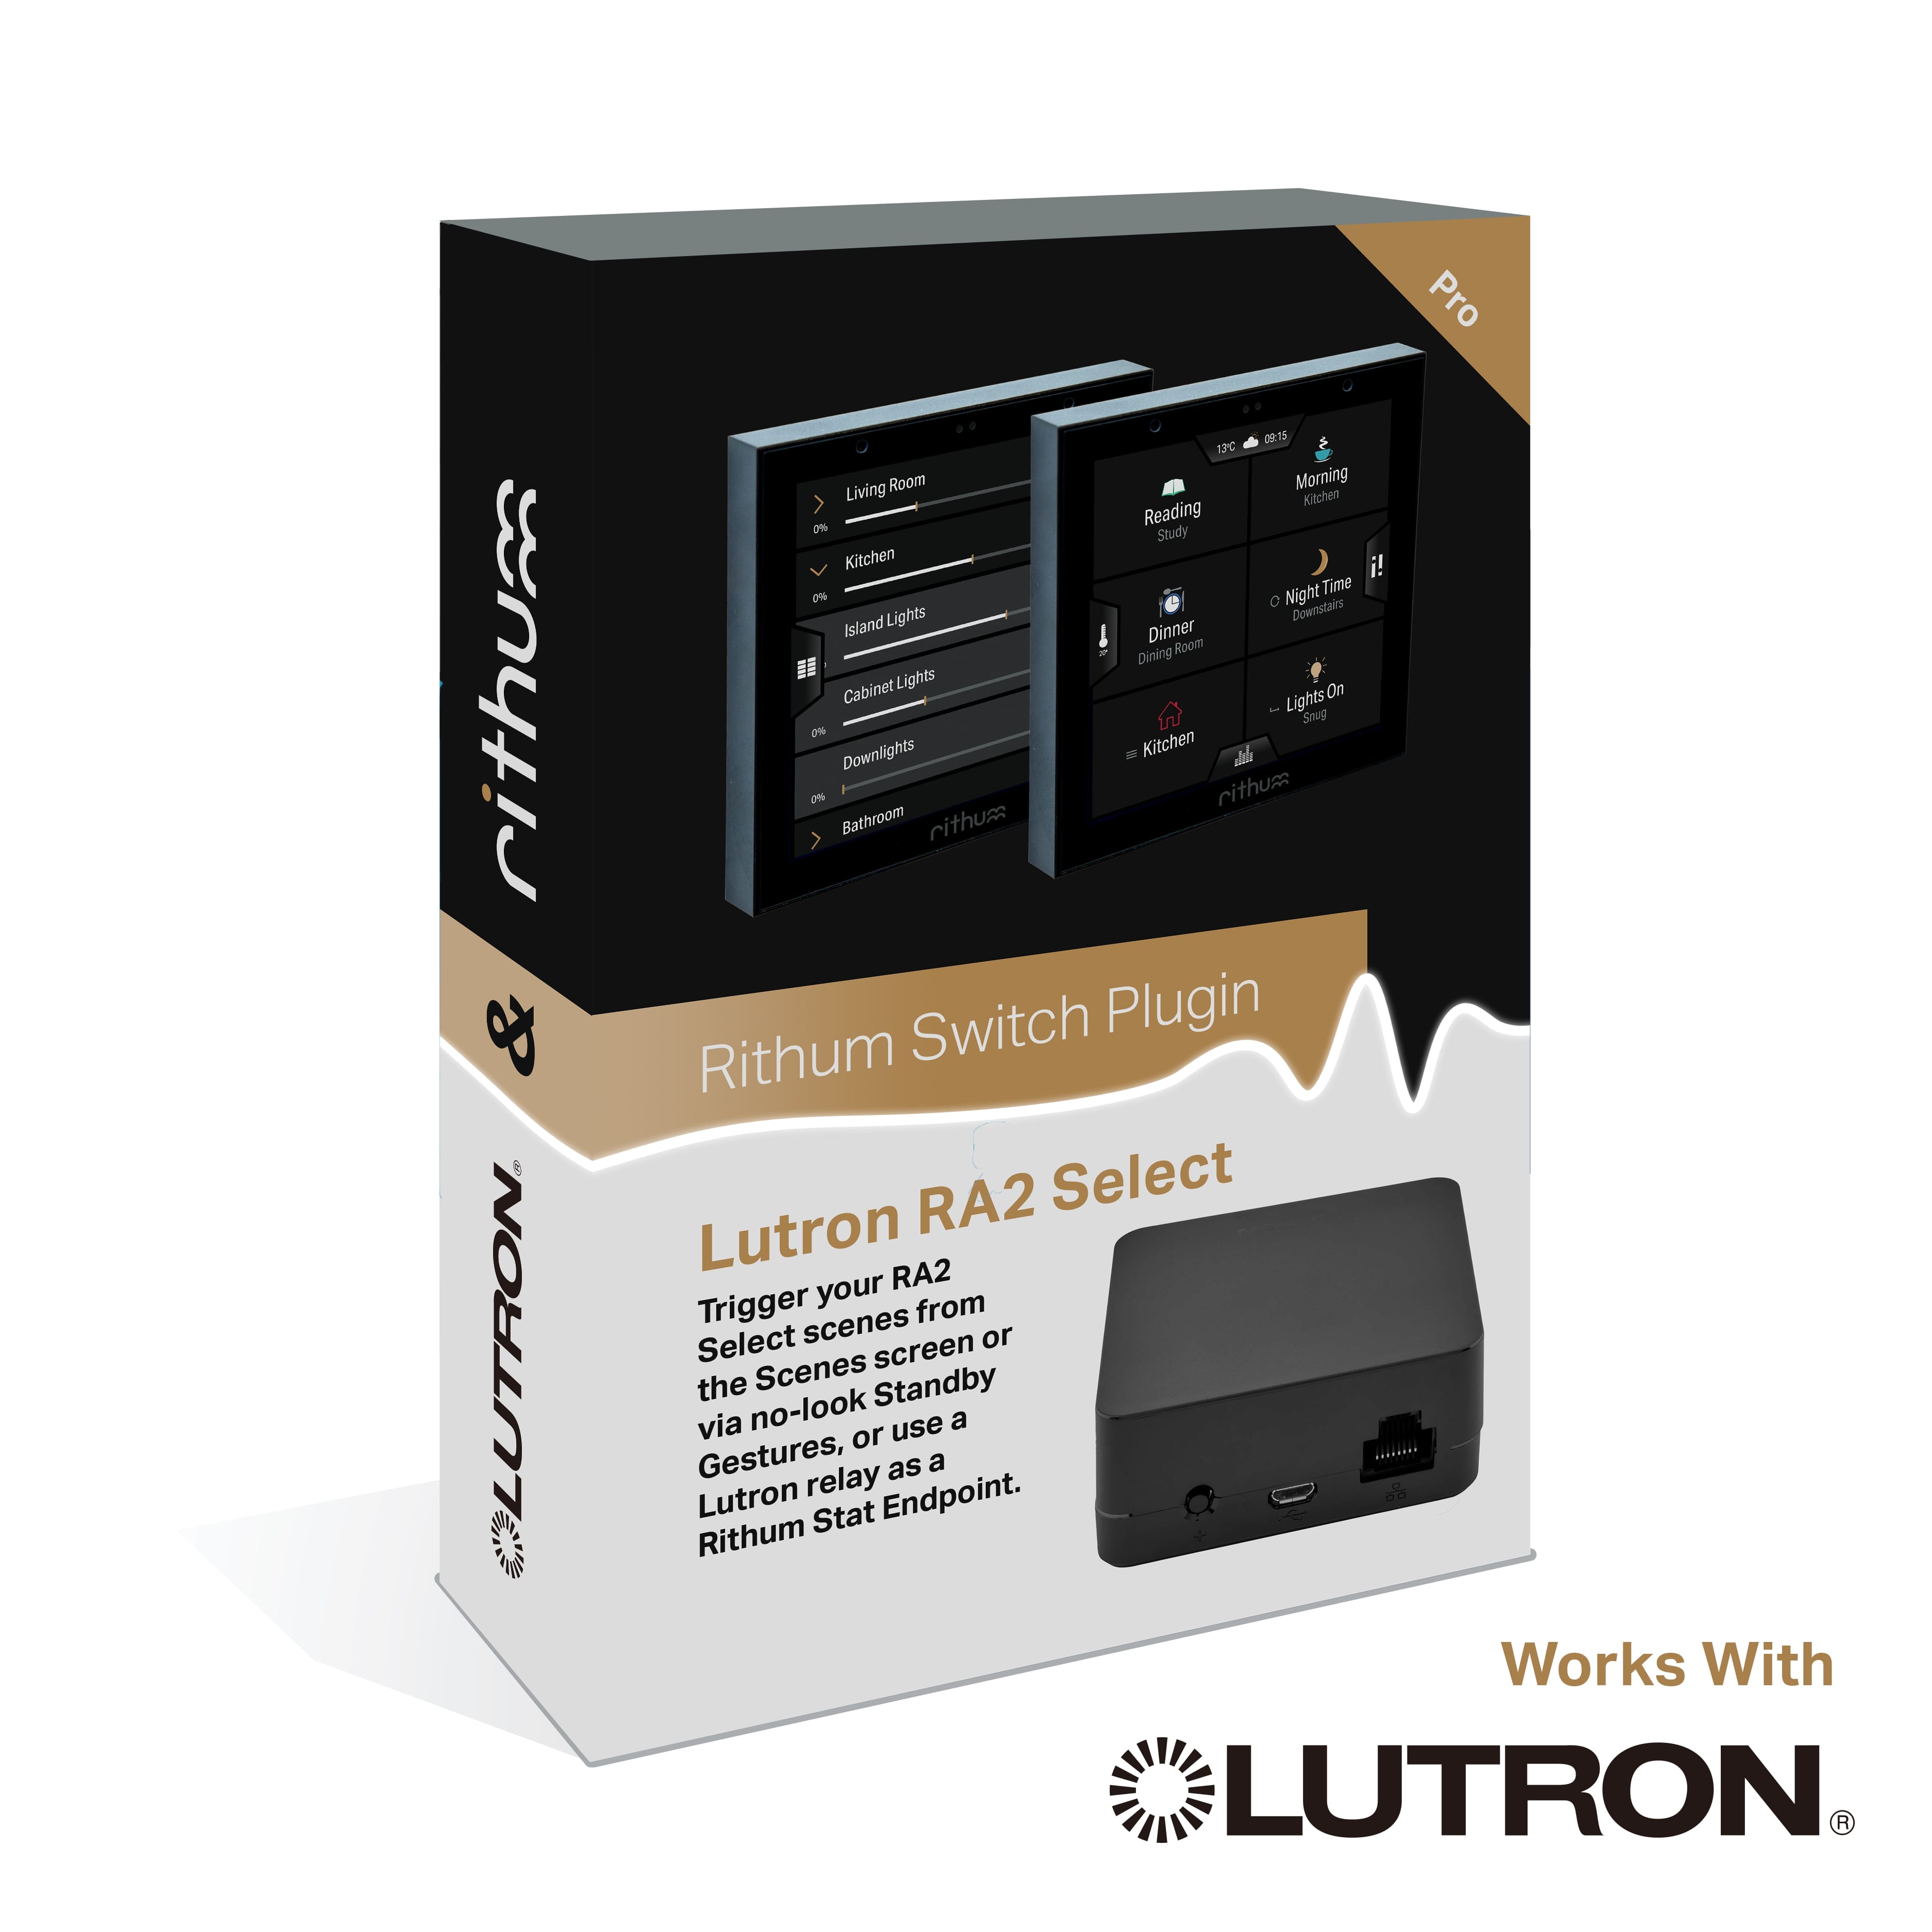 Lutron Ra2 Select Plugin